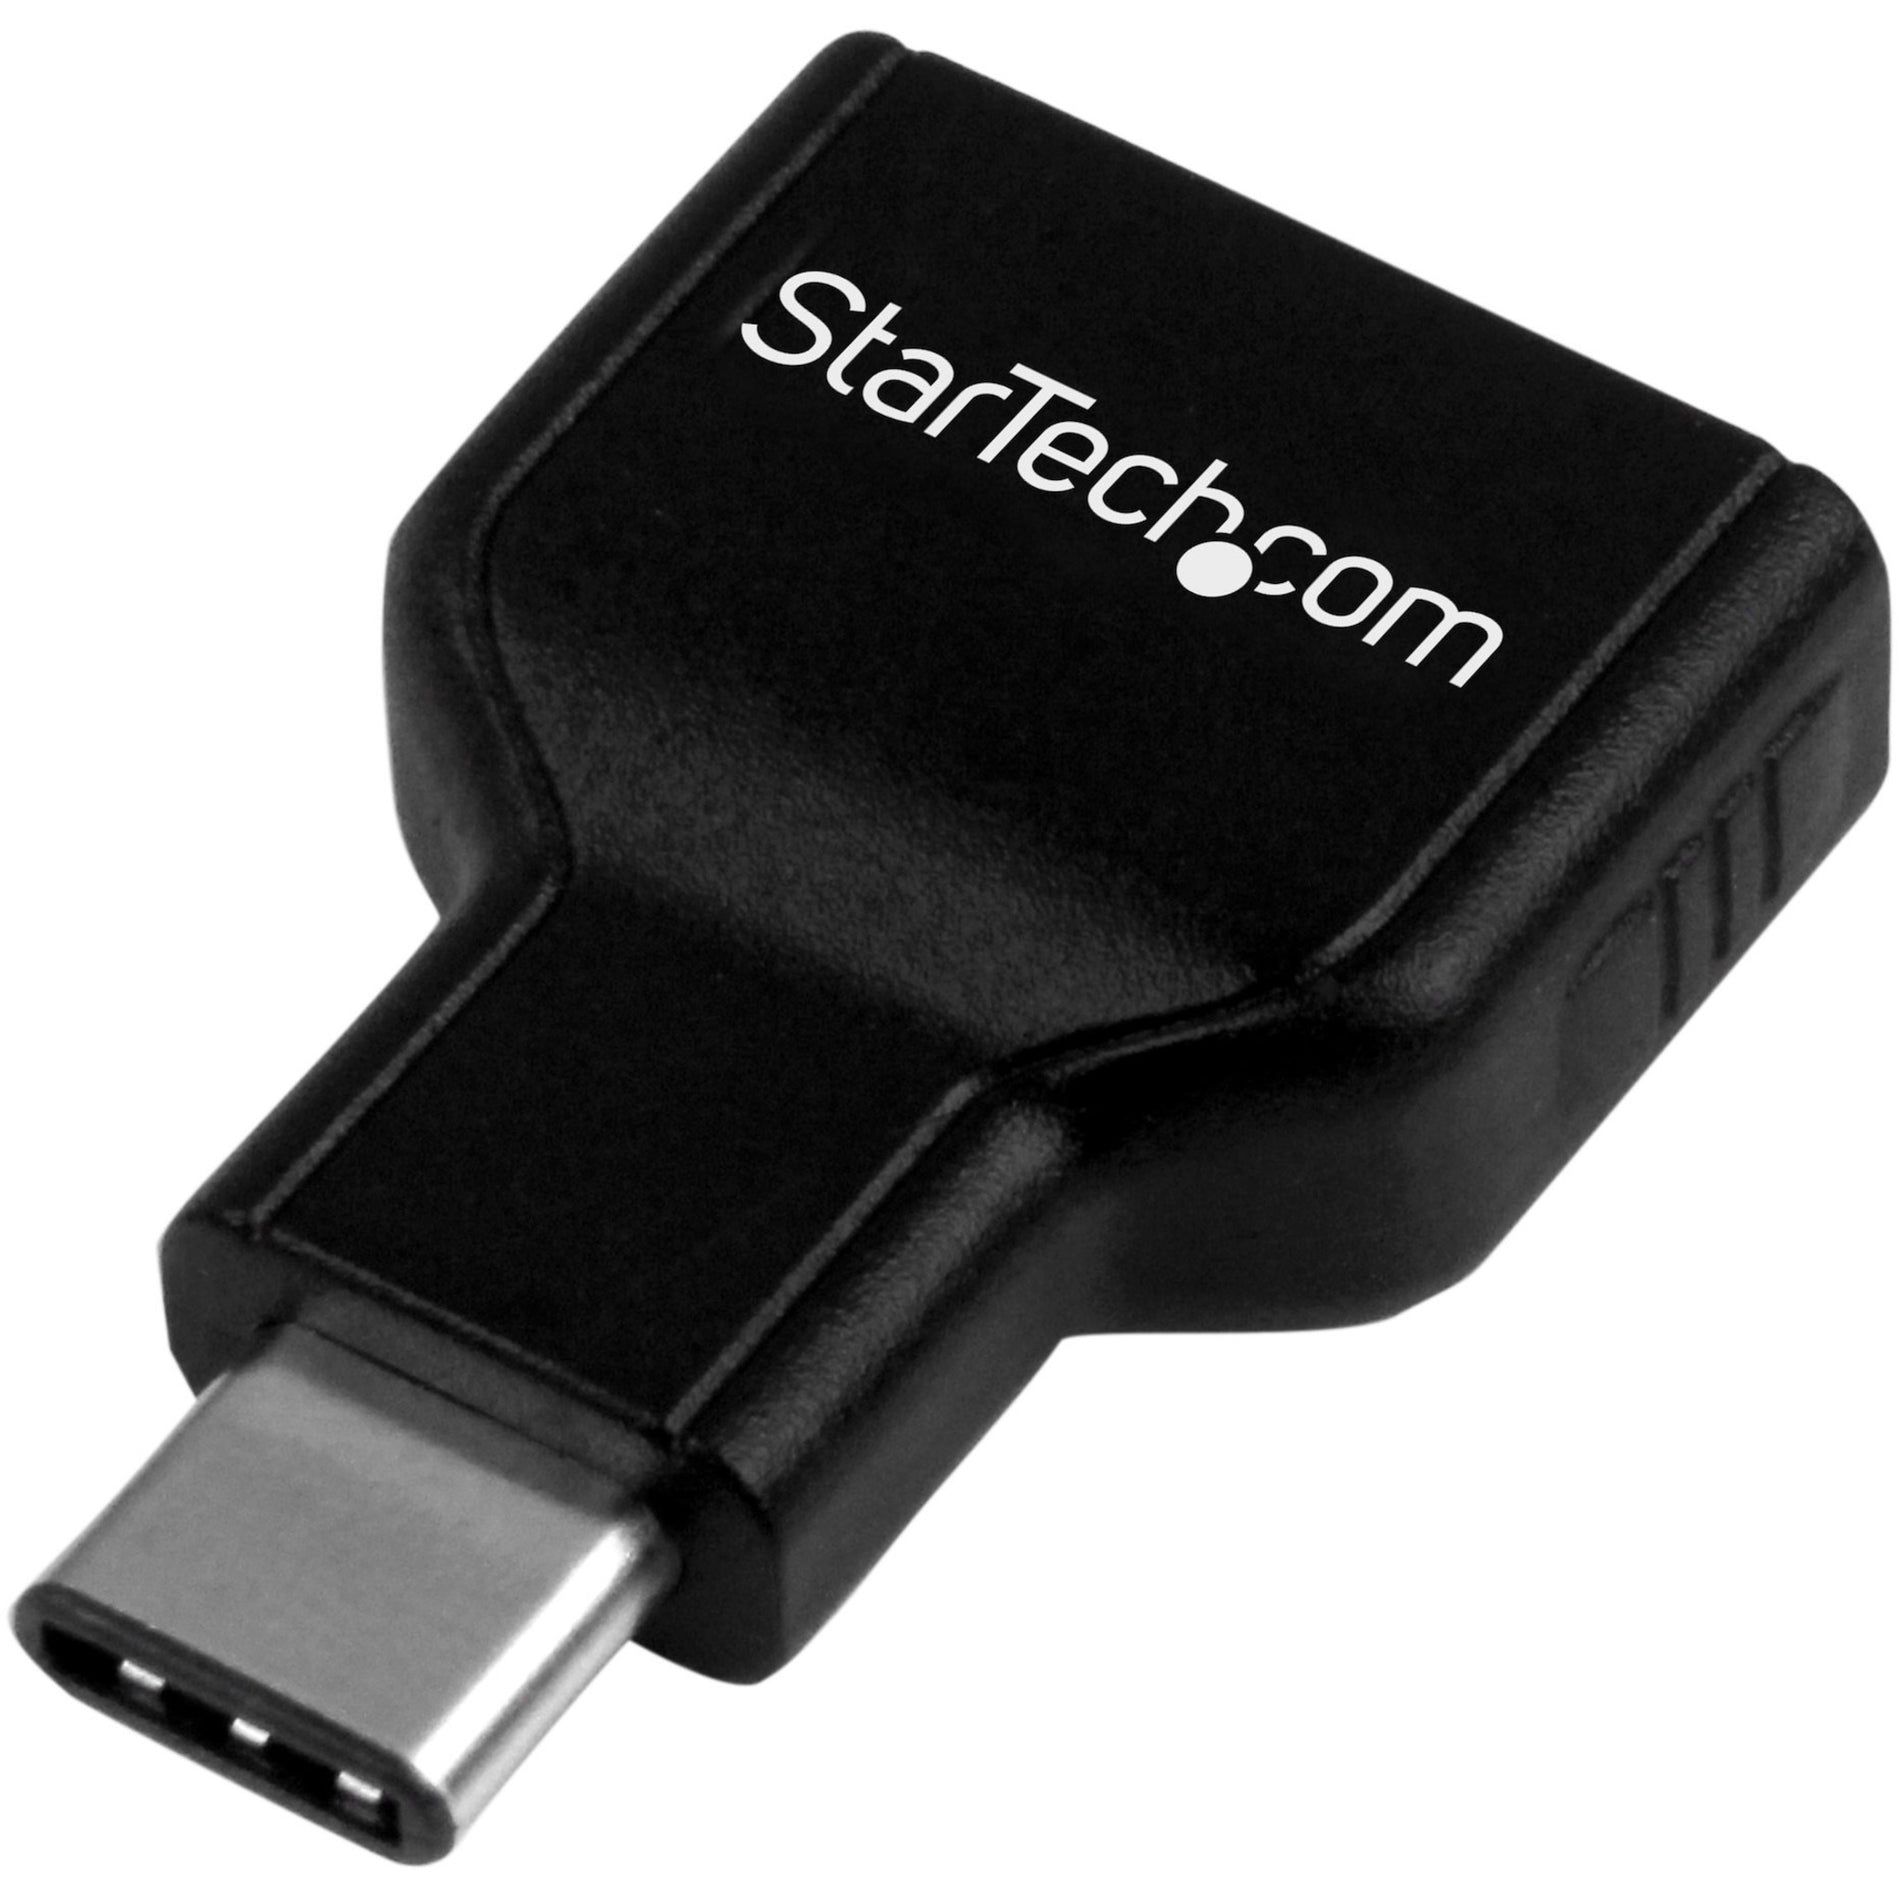 StarTech.com USB31CAADG USB-C to USB-A Adapter M/F - USB 3.0 Connetti a laptop USB C come Apple MacBook Chromebook Pixel e altro